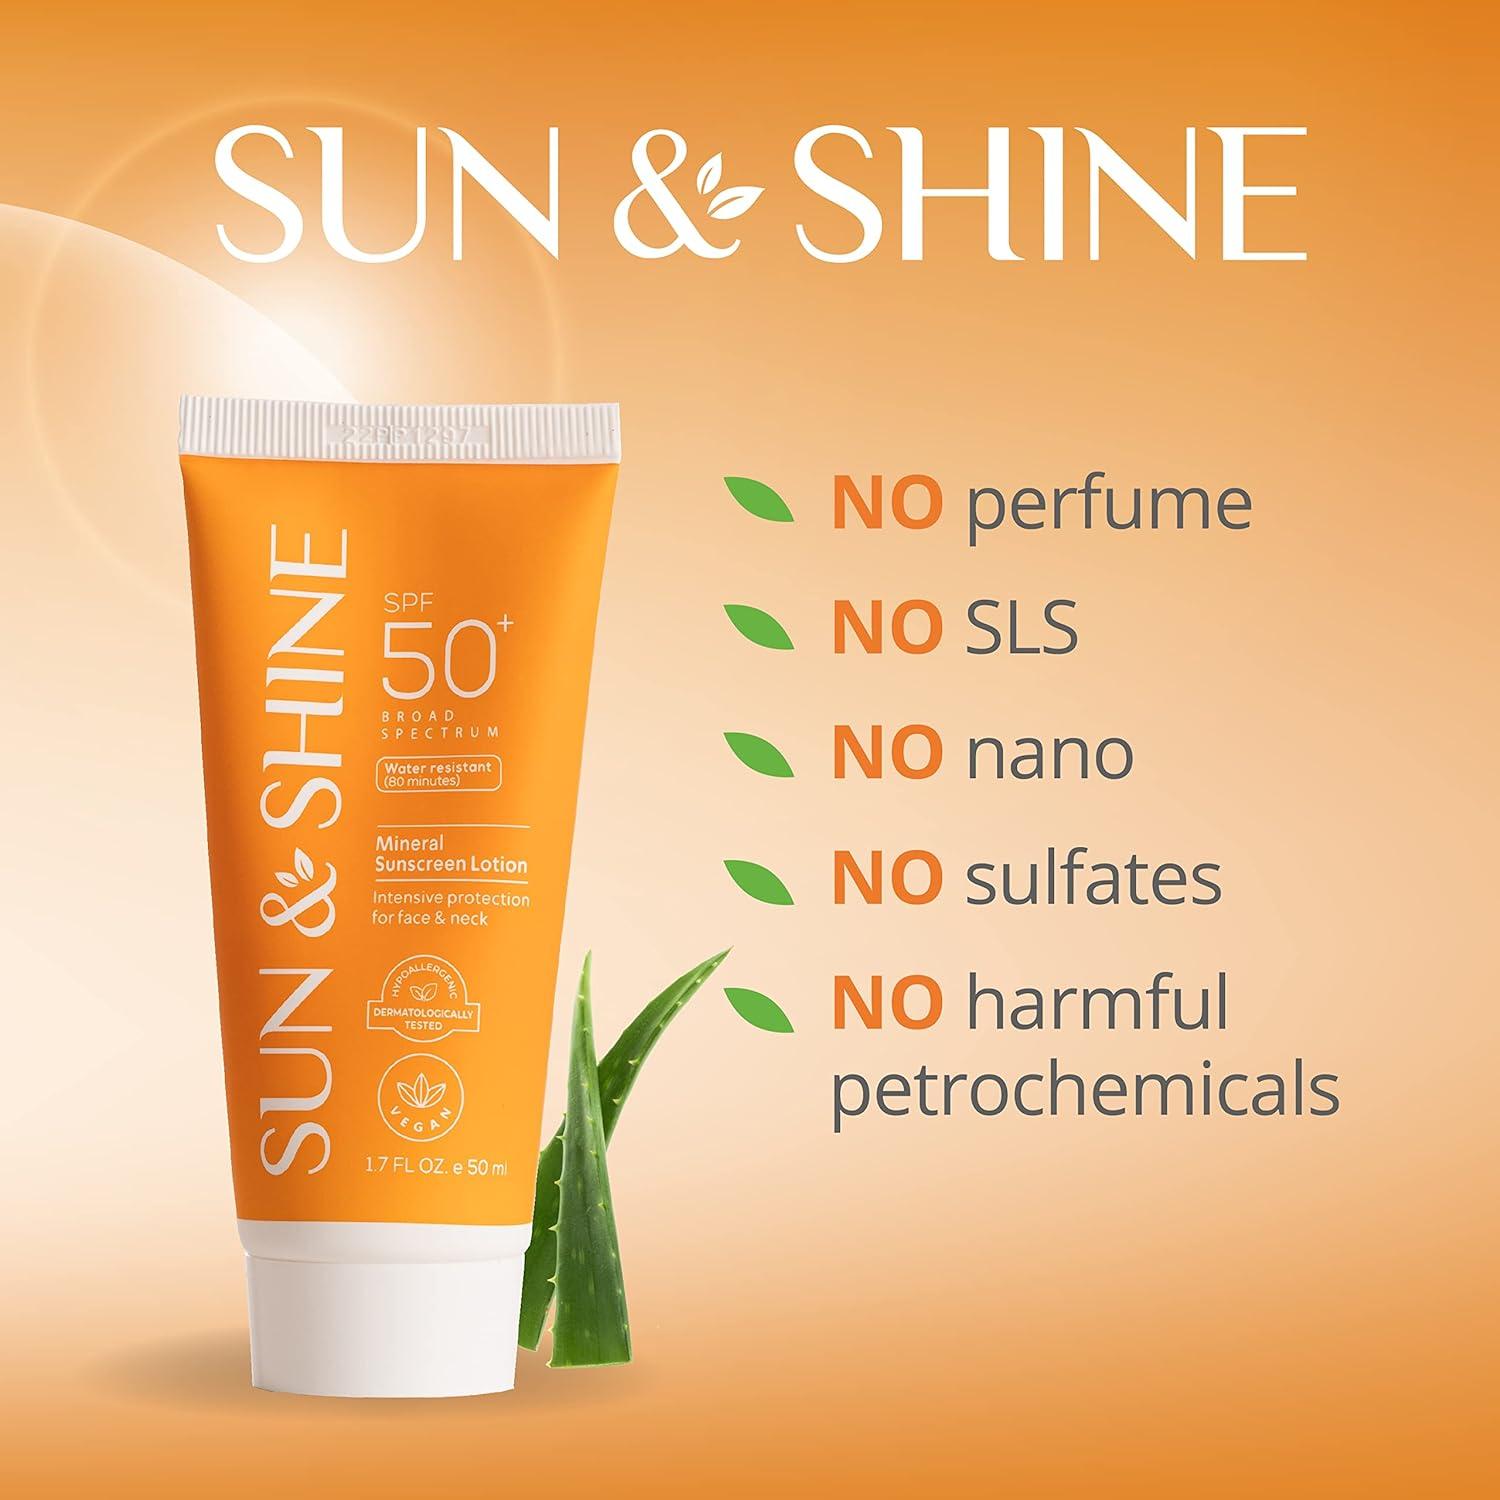 Sun & Shine Mineral Sunscreen Lotion 2-pack Bundle